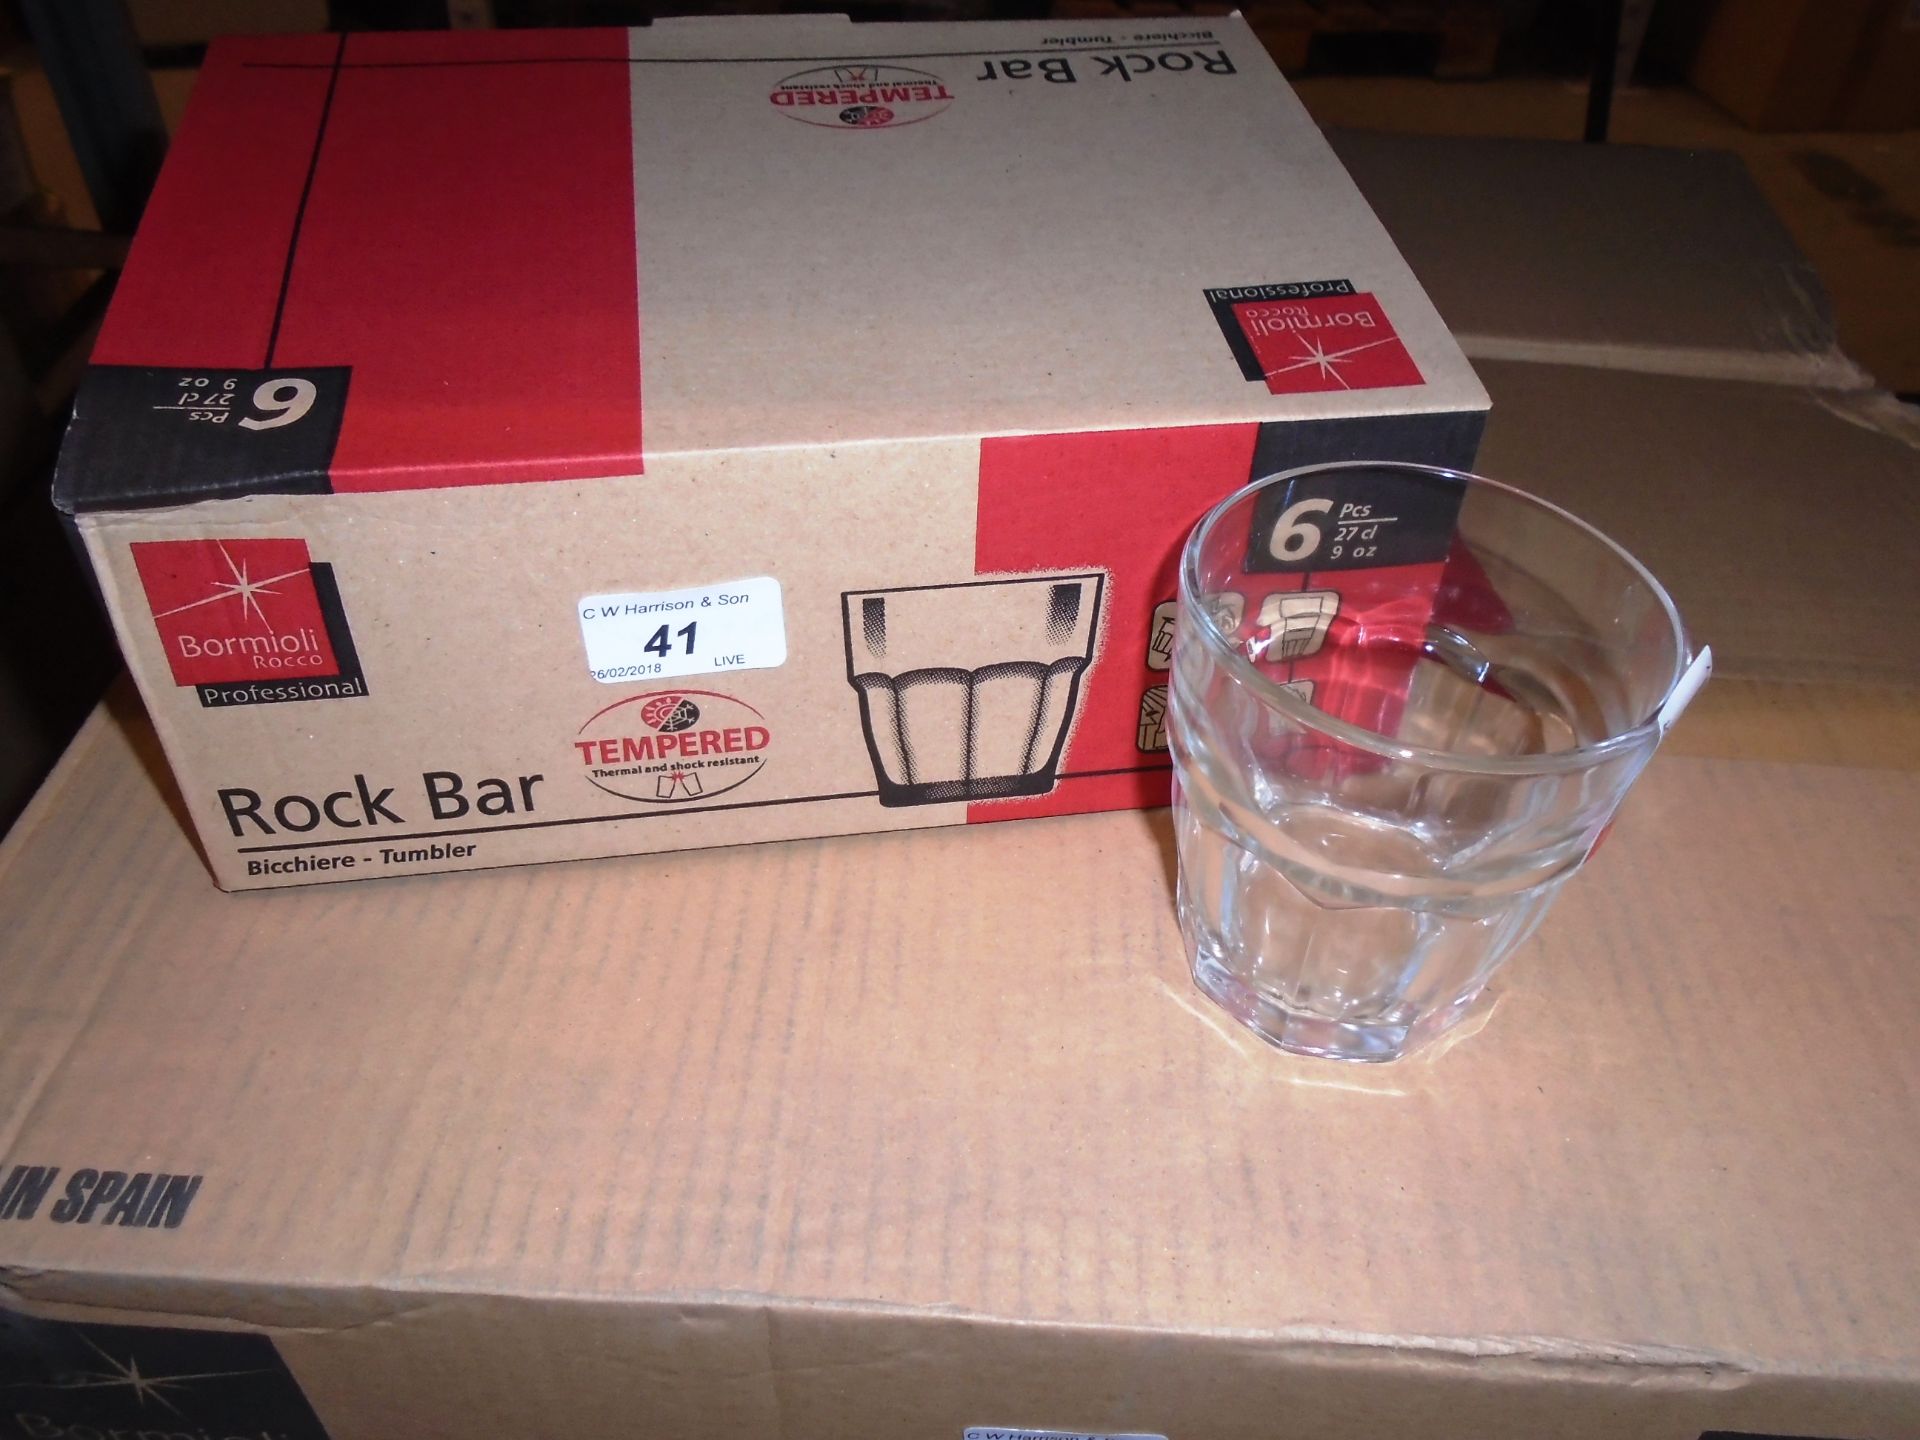 48 x Bormioli rock bar glasses - 1 x outer box